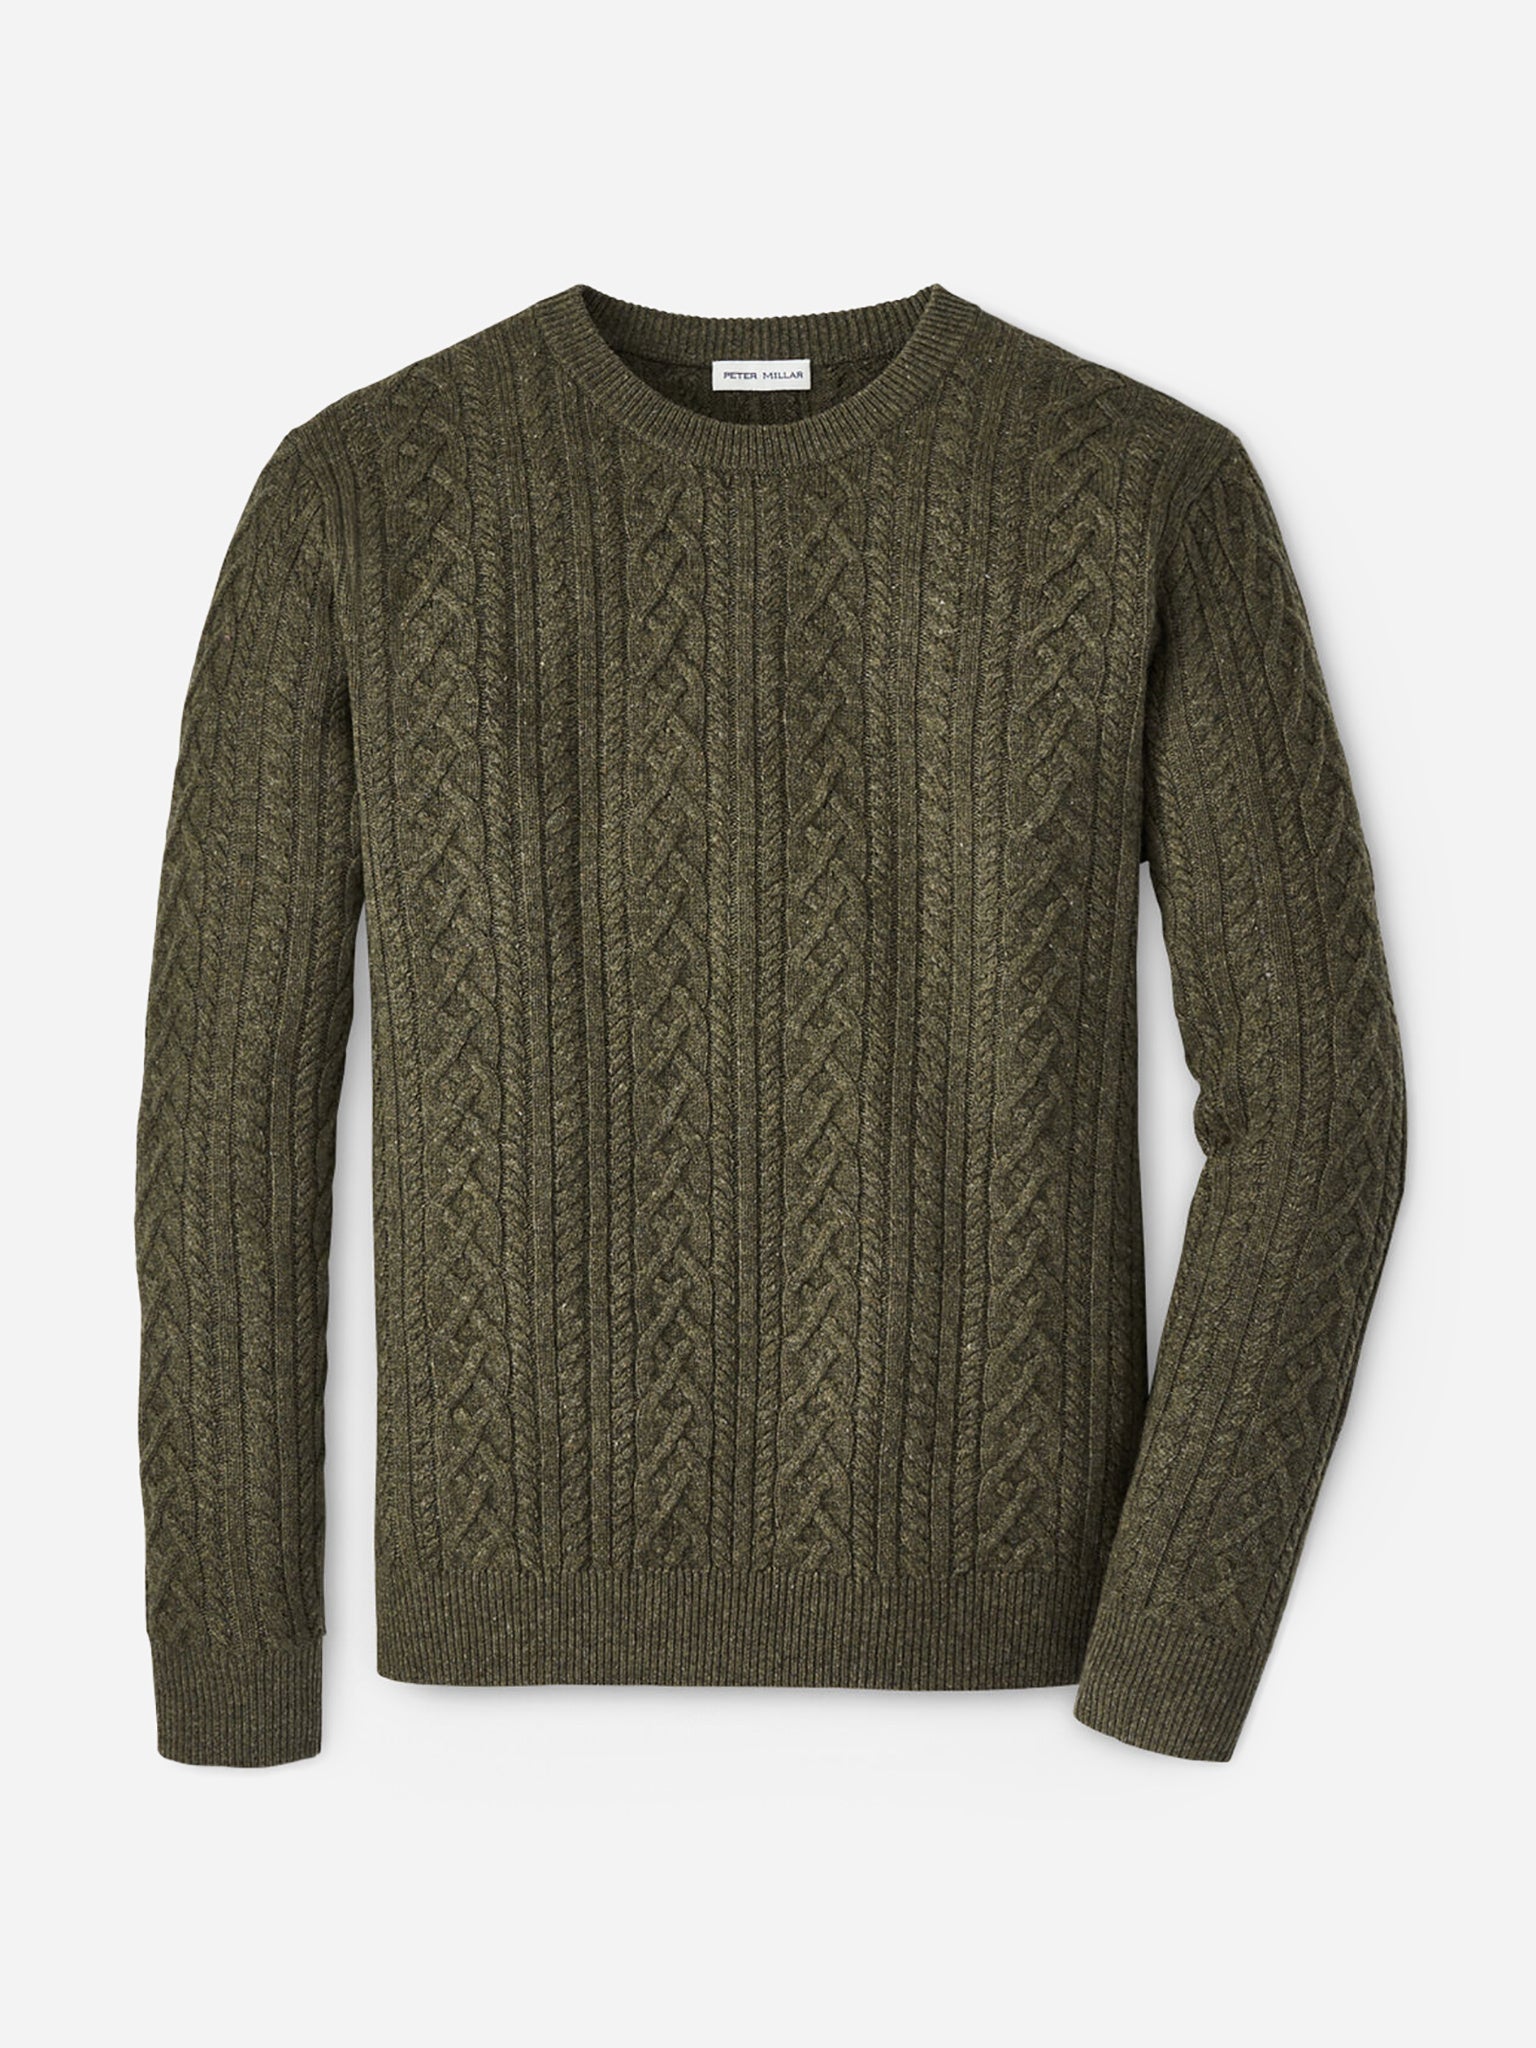 J. Crew Men's Wool Cable Knit Fisherman Sweater XL - Sweaters